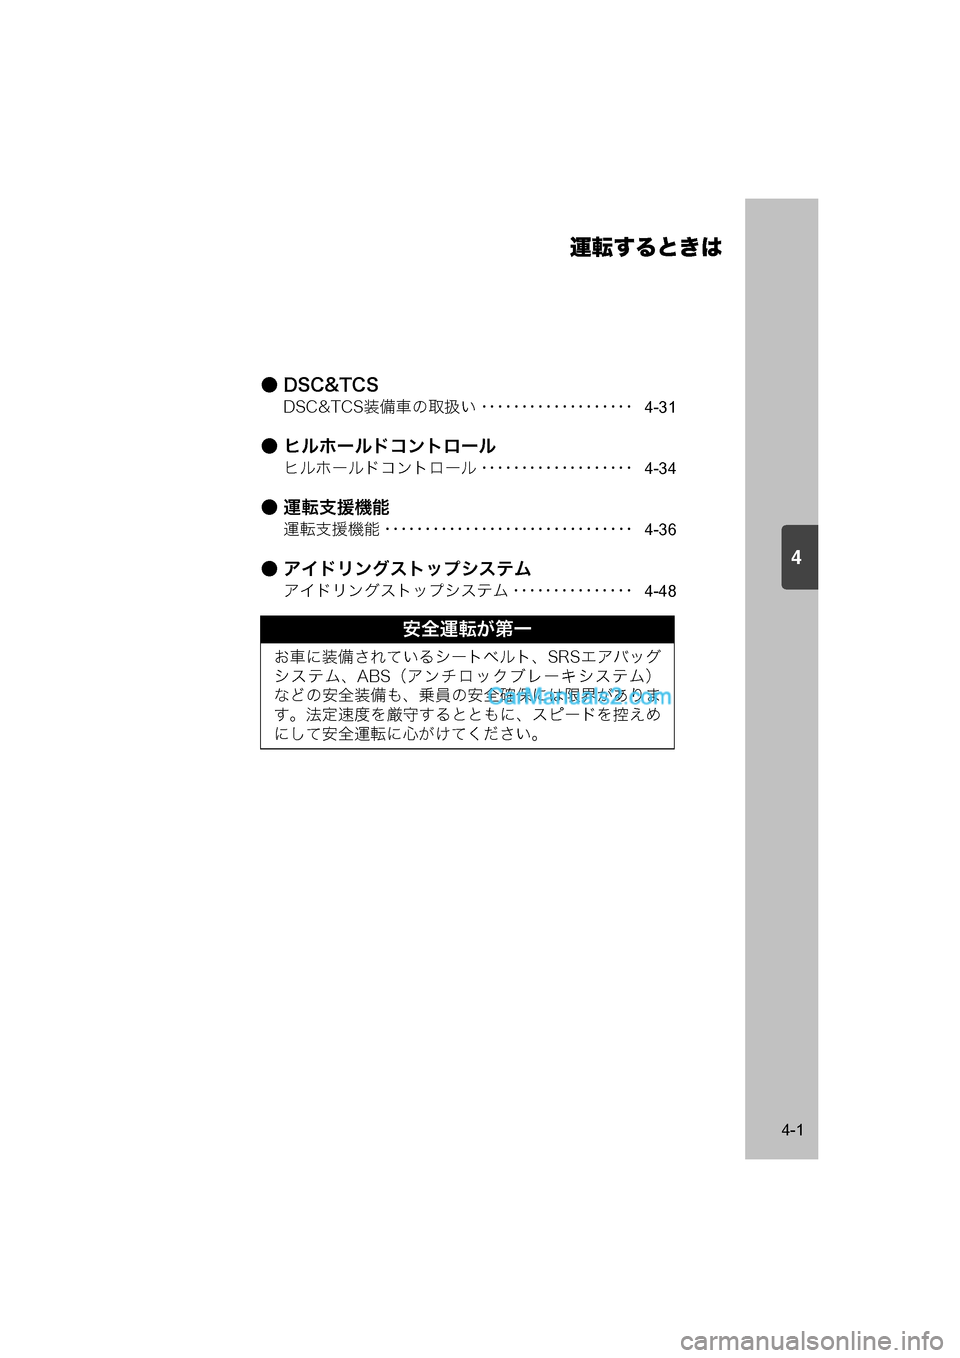 MAZDA MODEL CARROL 2015  取扱説明書 (キャロル) (in Japanese) 4
運転するときは
4-1
●DSC&TCS
DSC&TCS装備車の取扱い･･･････････････････4-31
● ヒルホールドコントロール
ヒルホールドコントロ